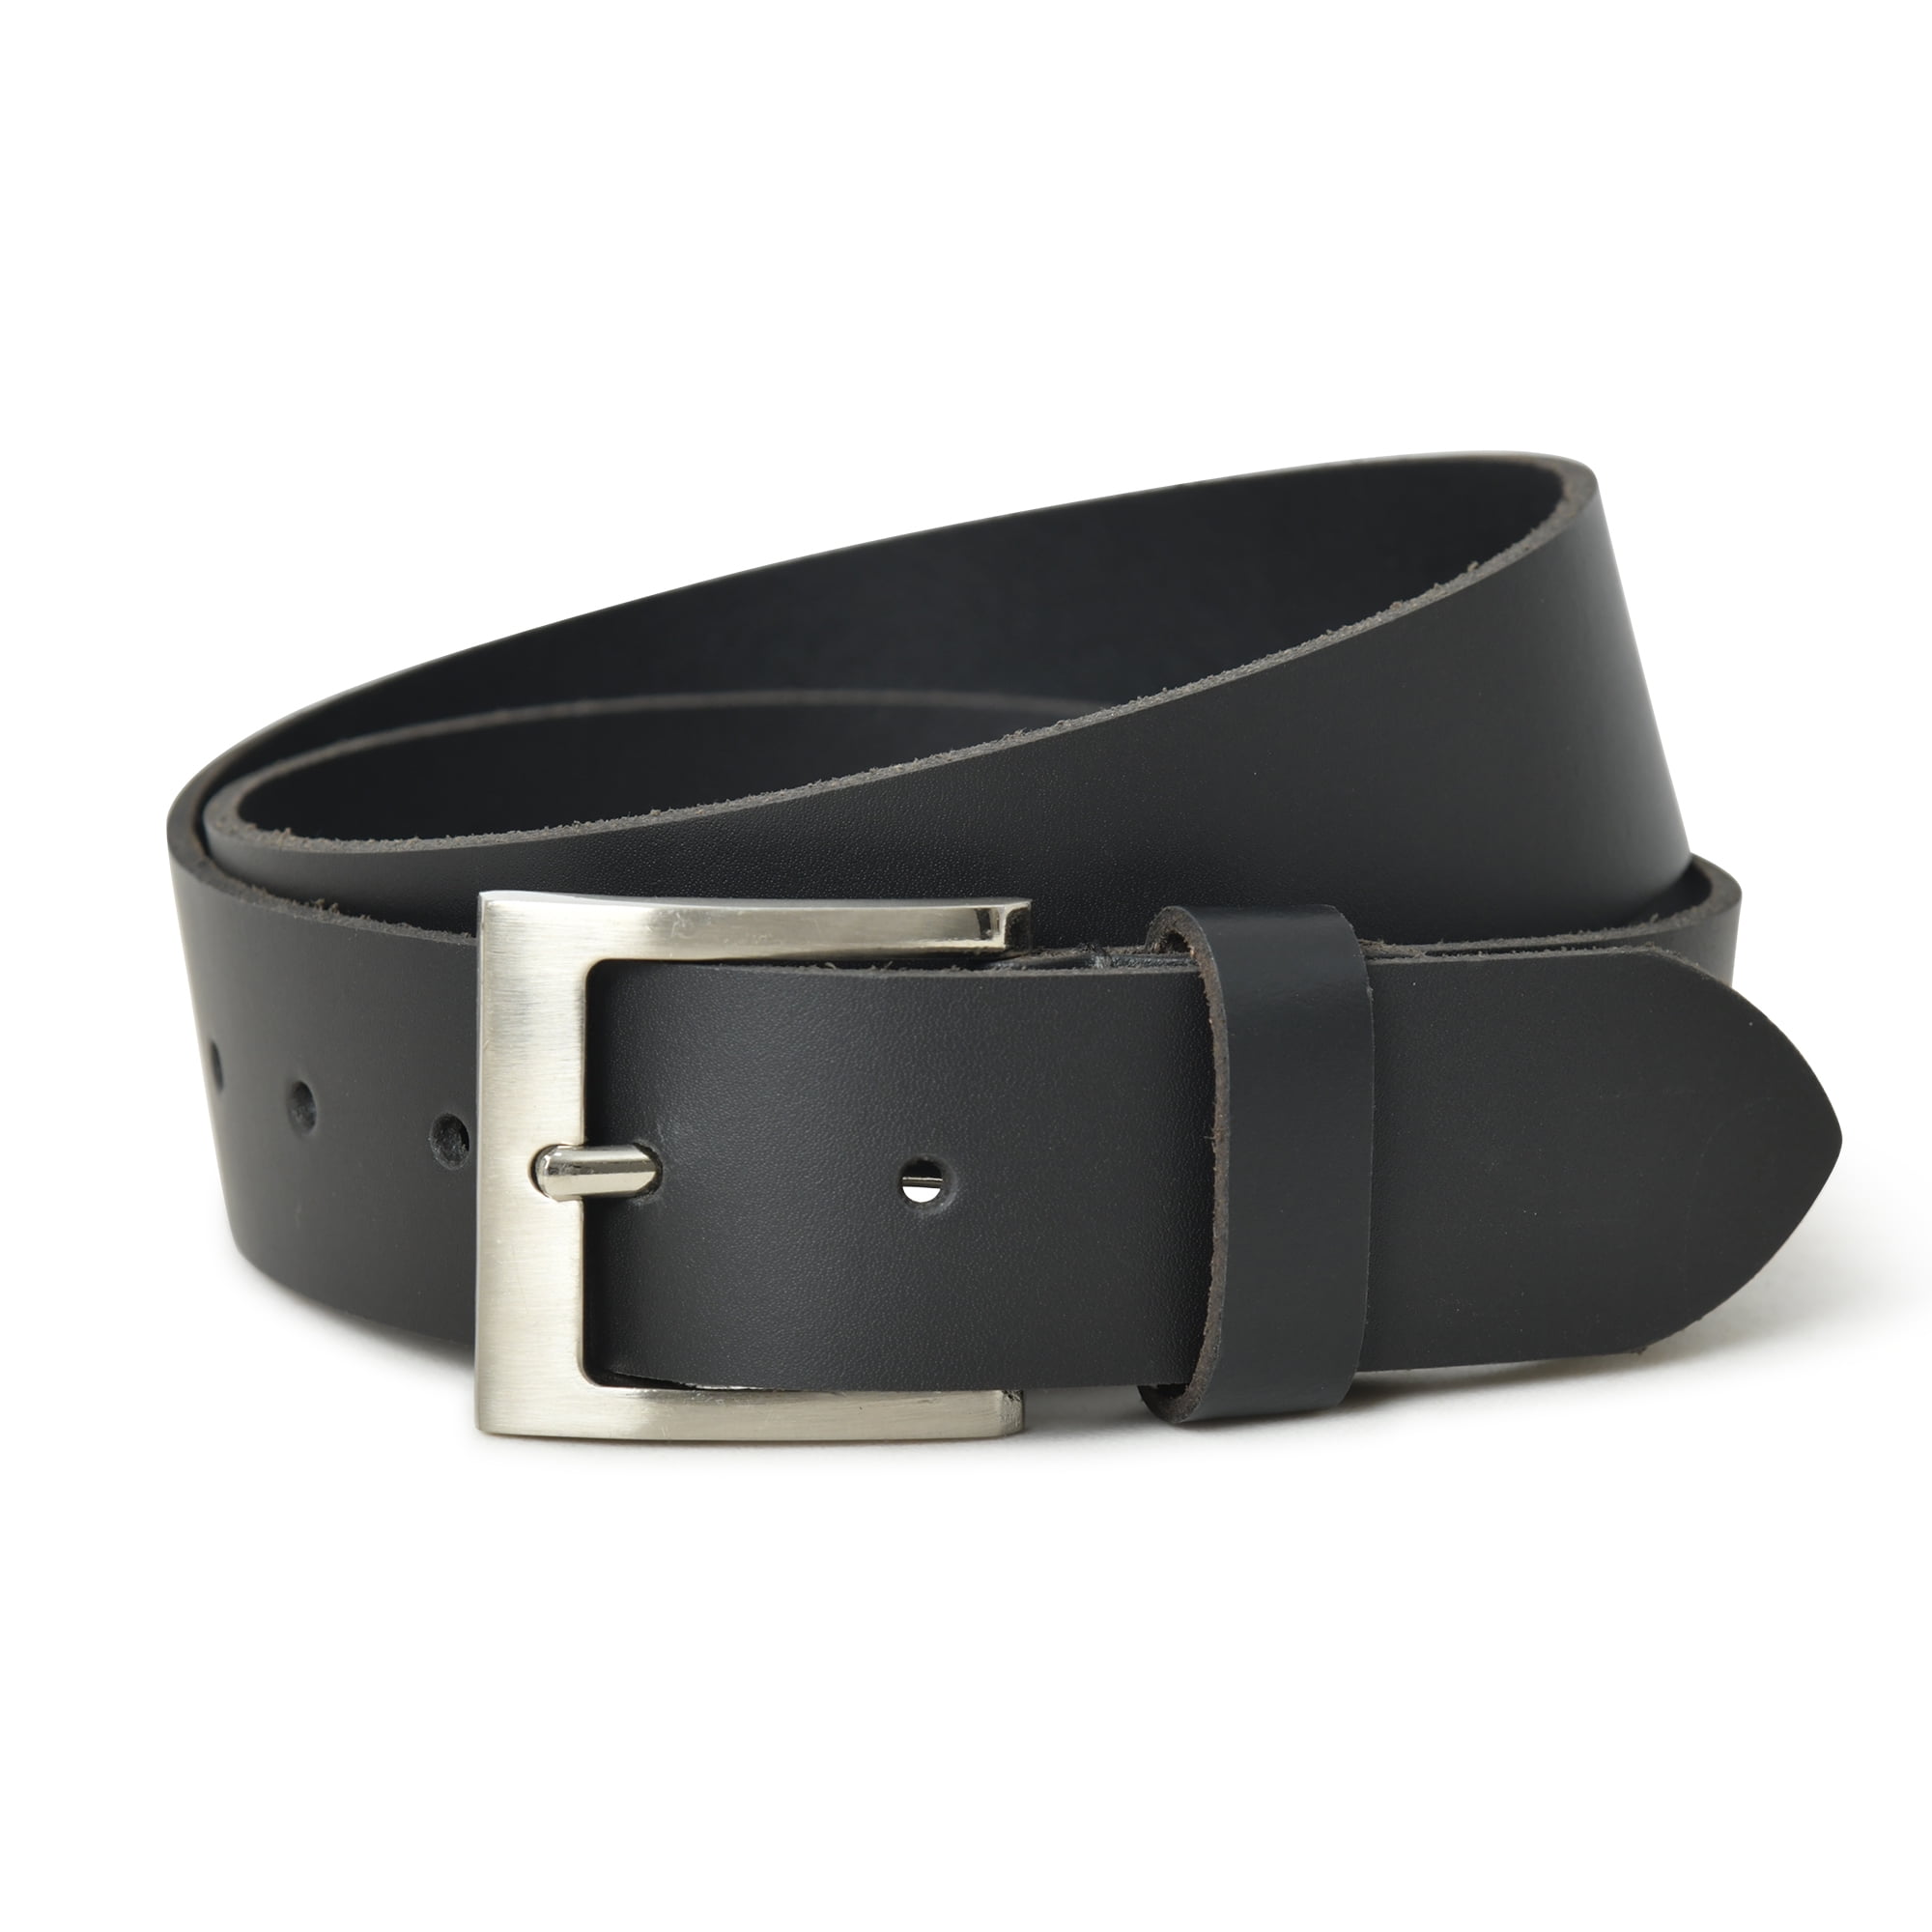 Coipdfty Mens Belt Leather, Ratchet Belt for Men with Slided Western Cowboy  Belt Buckle for Dress and Casual 